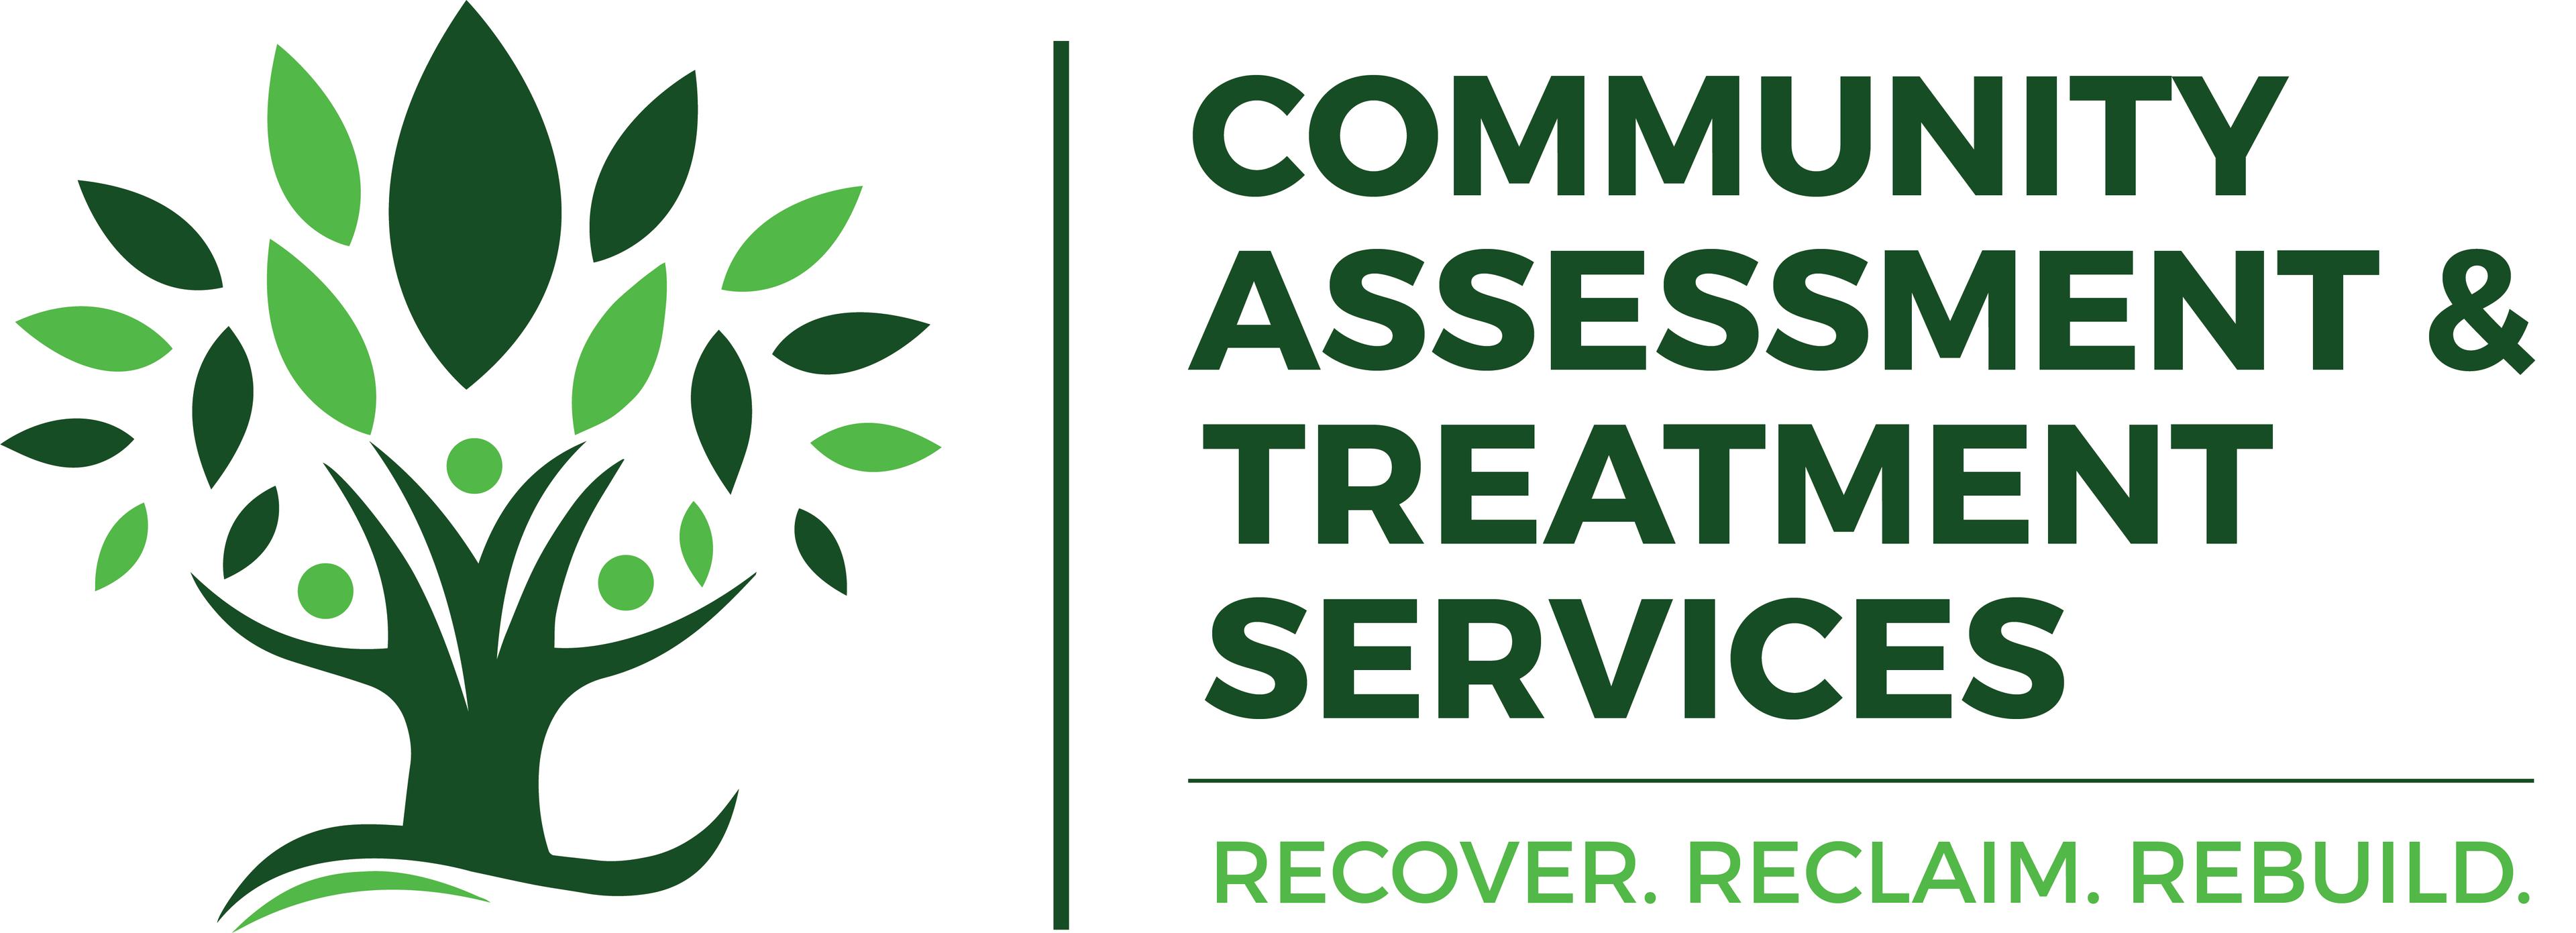 Community Assessment & Treatment Services